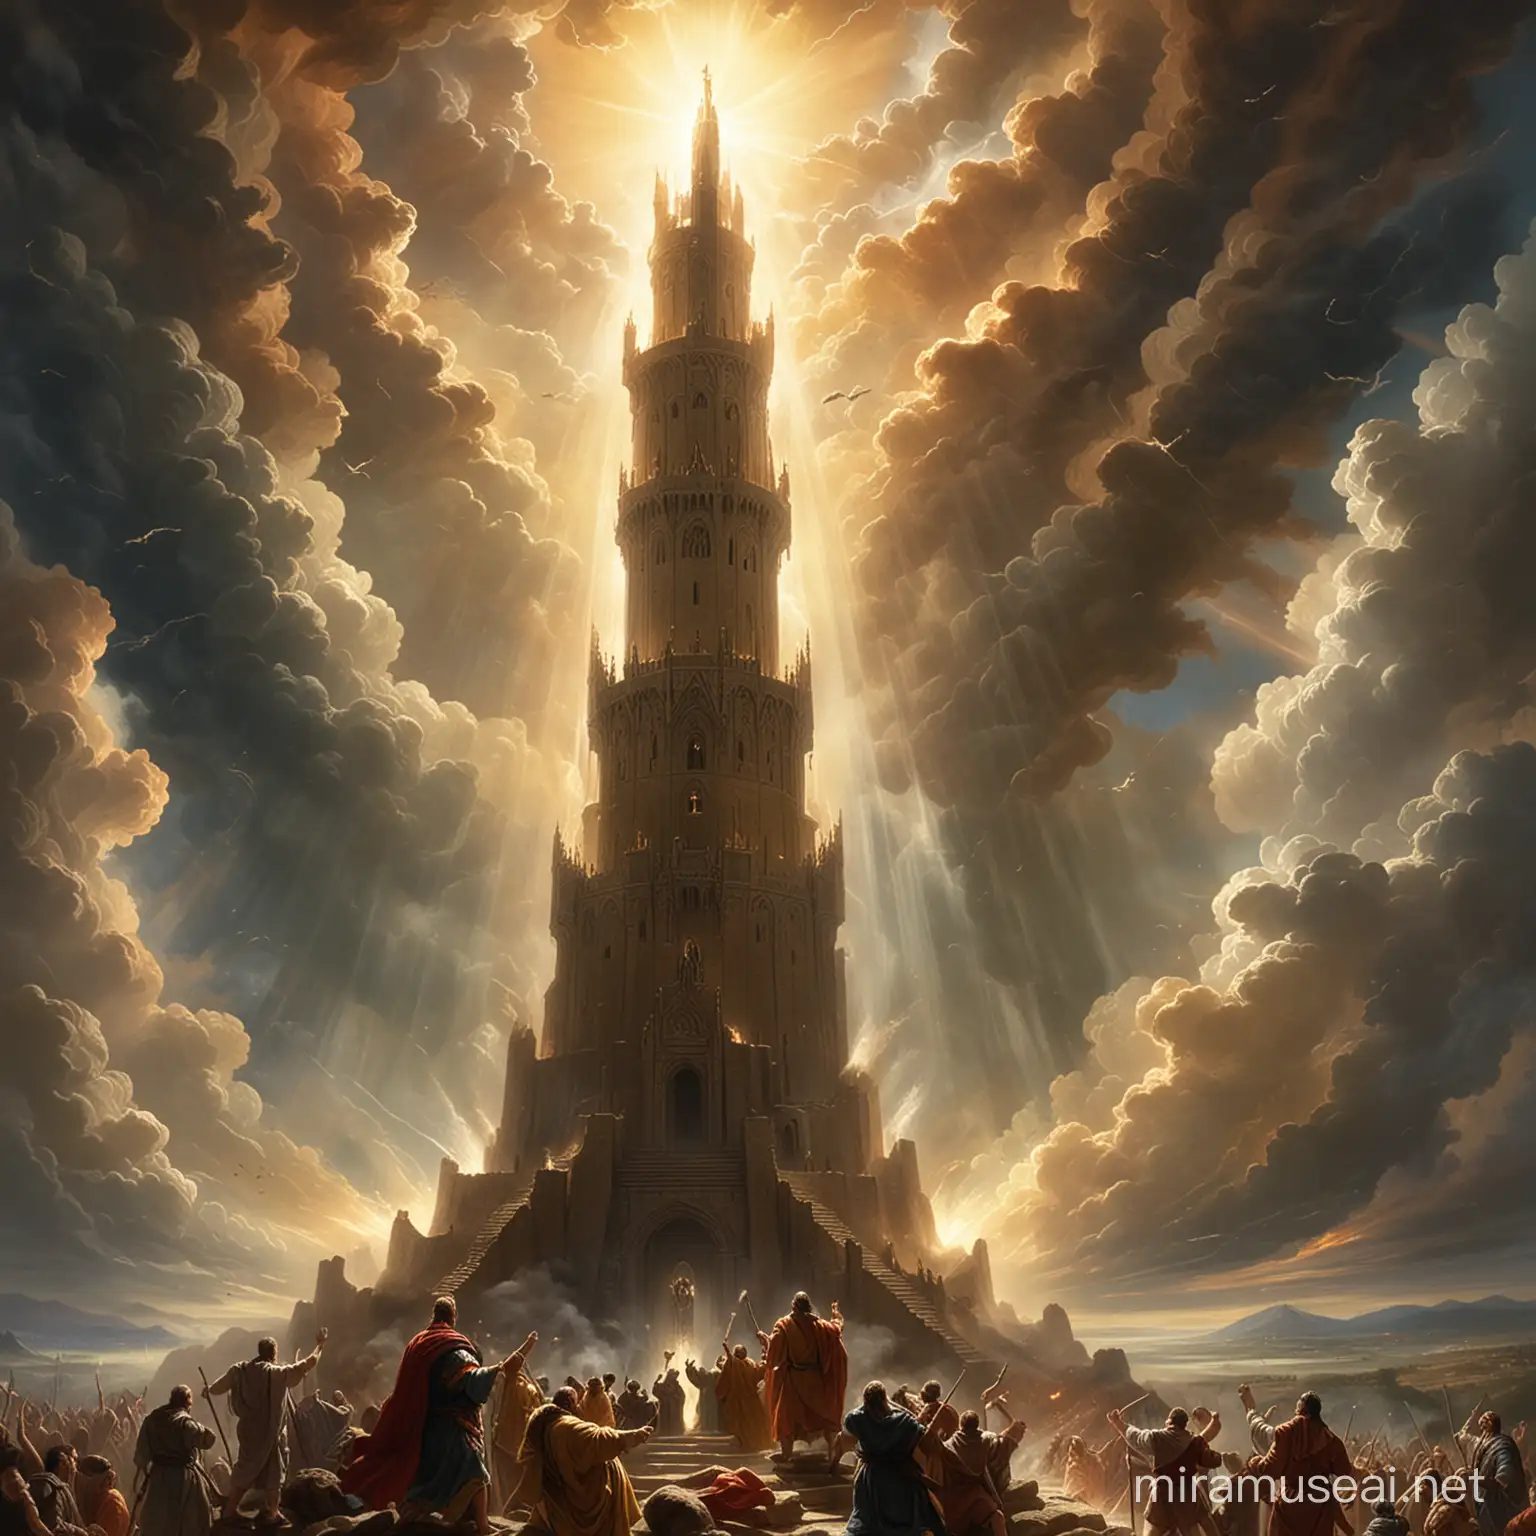 God striking down a tower reaching towards heaven
